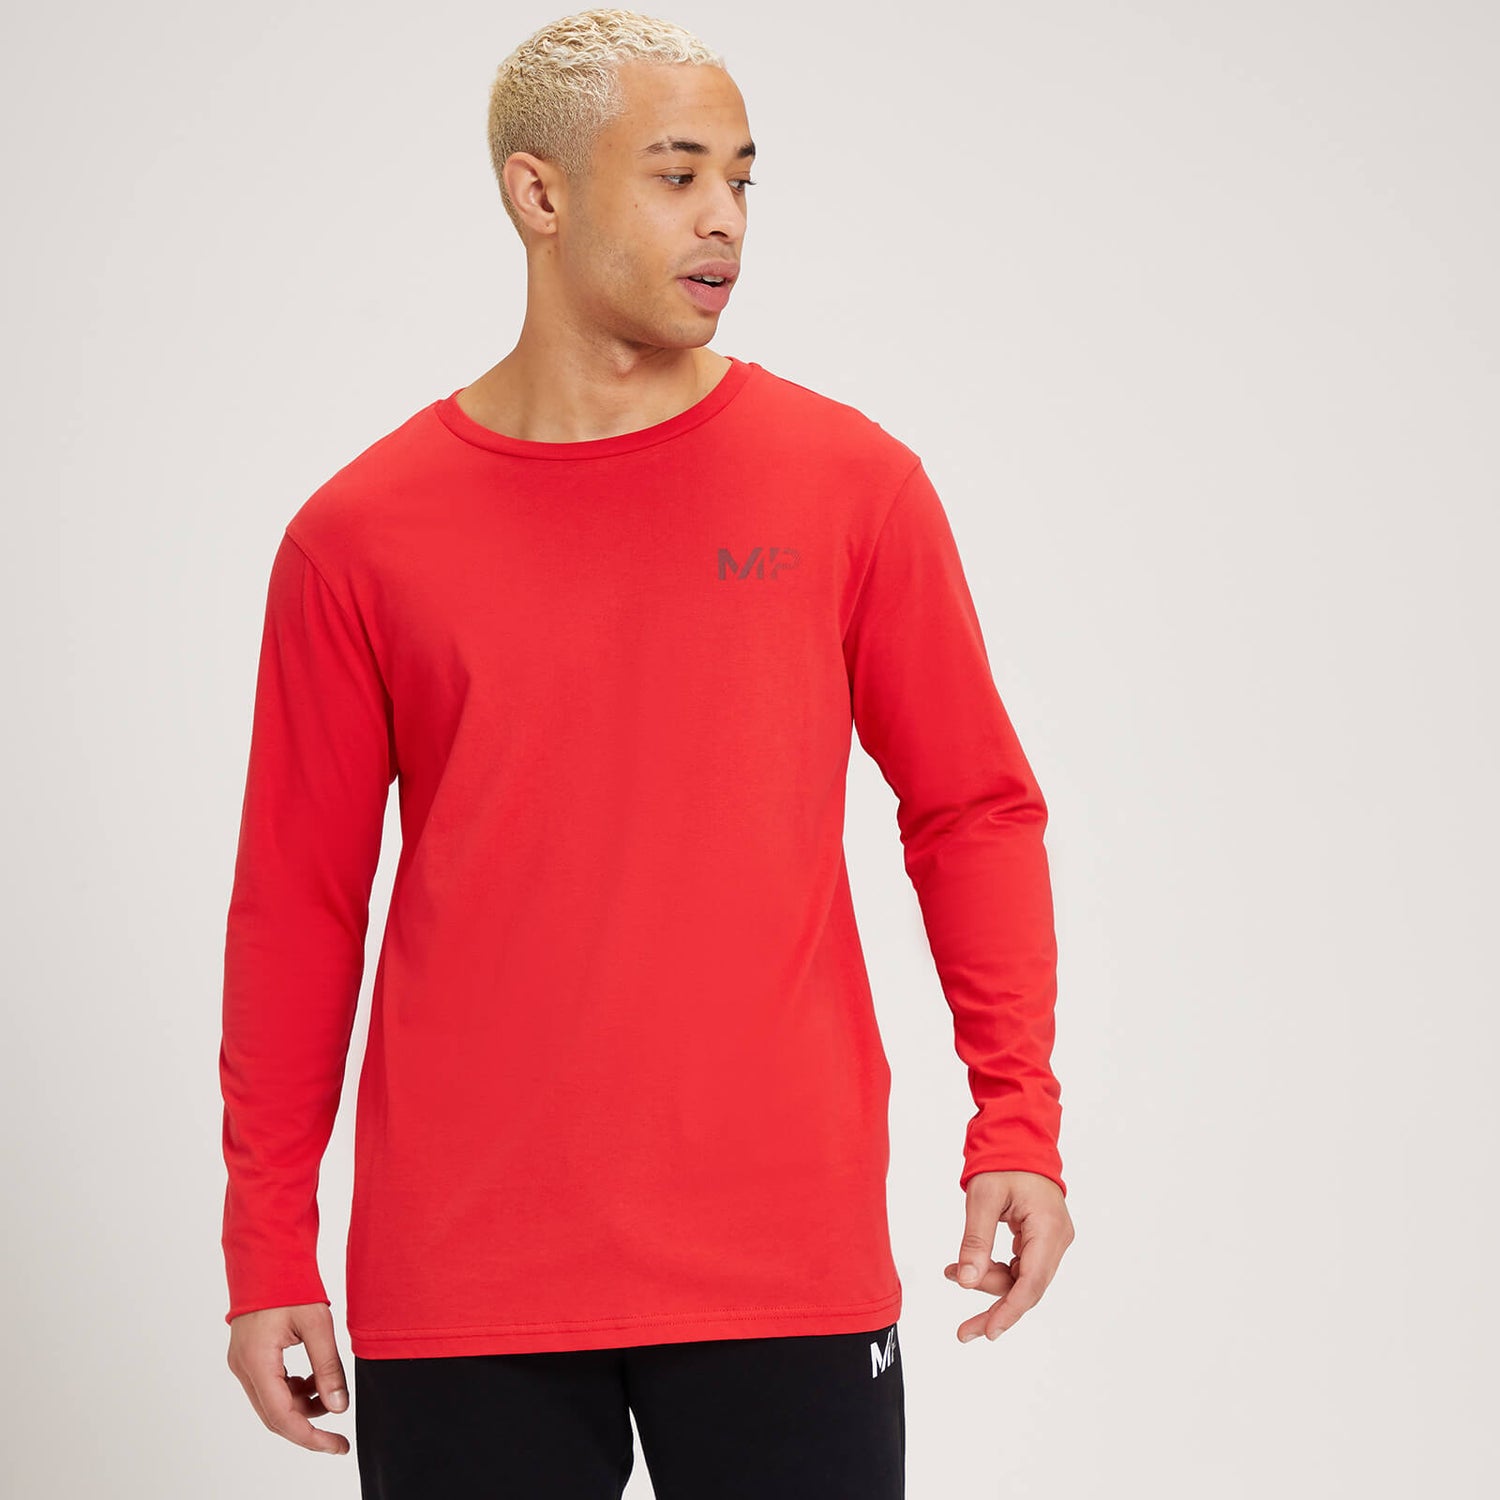 Camiseta de manga larga con estampado gráfico gradual para hombre de MP - Rojo - XXS